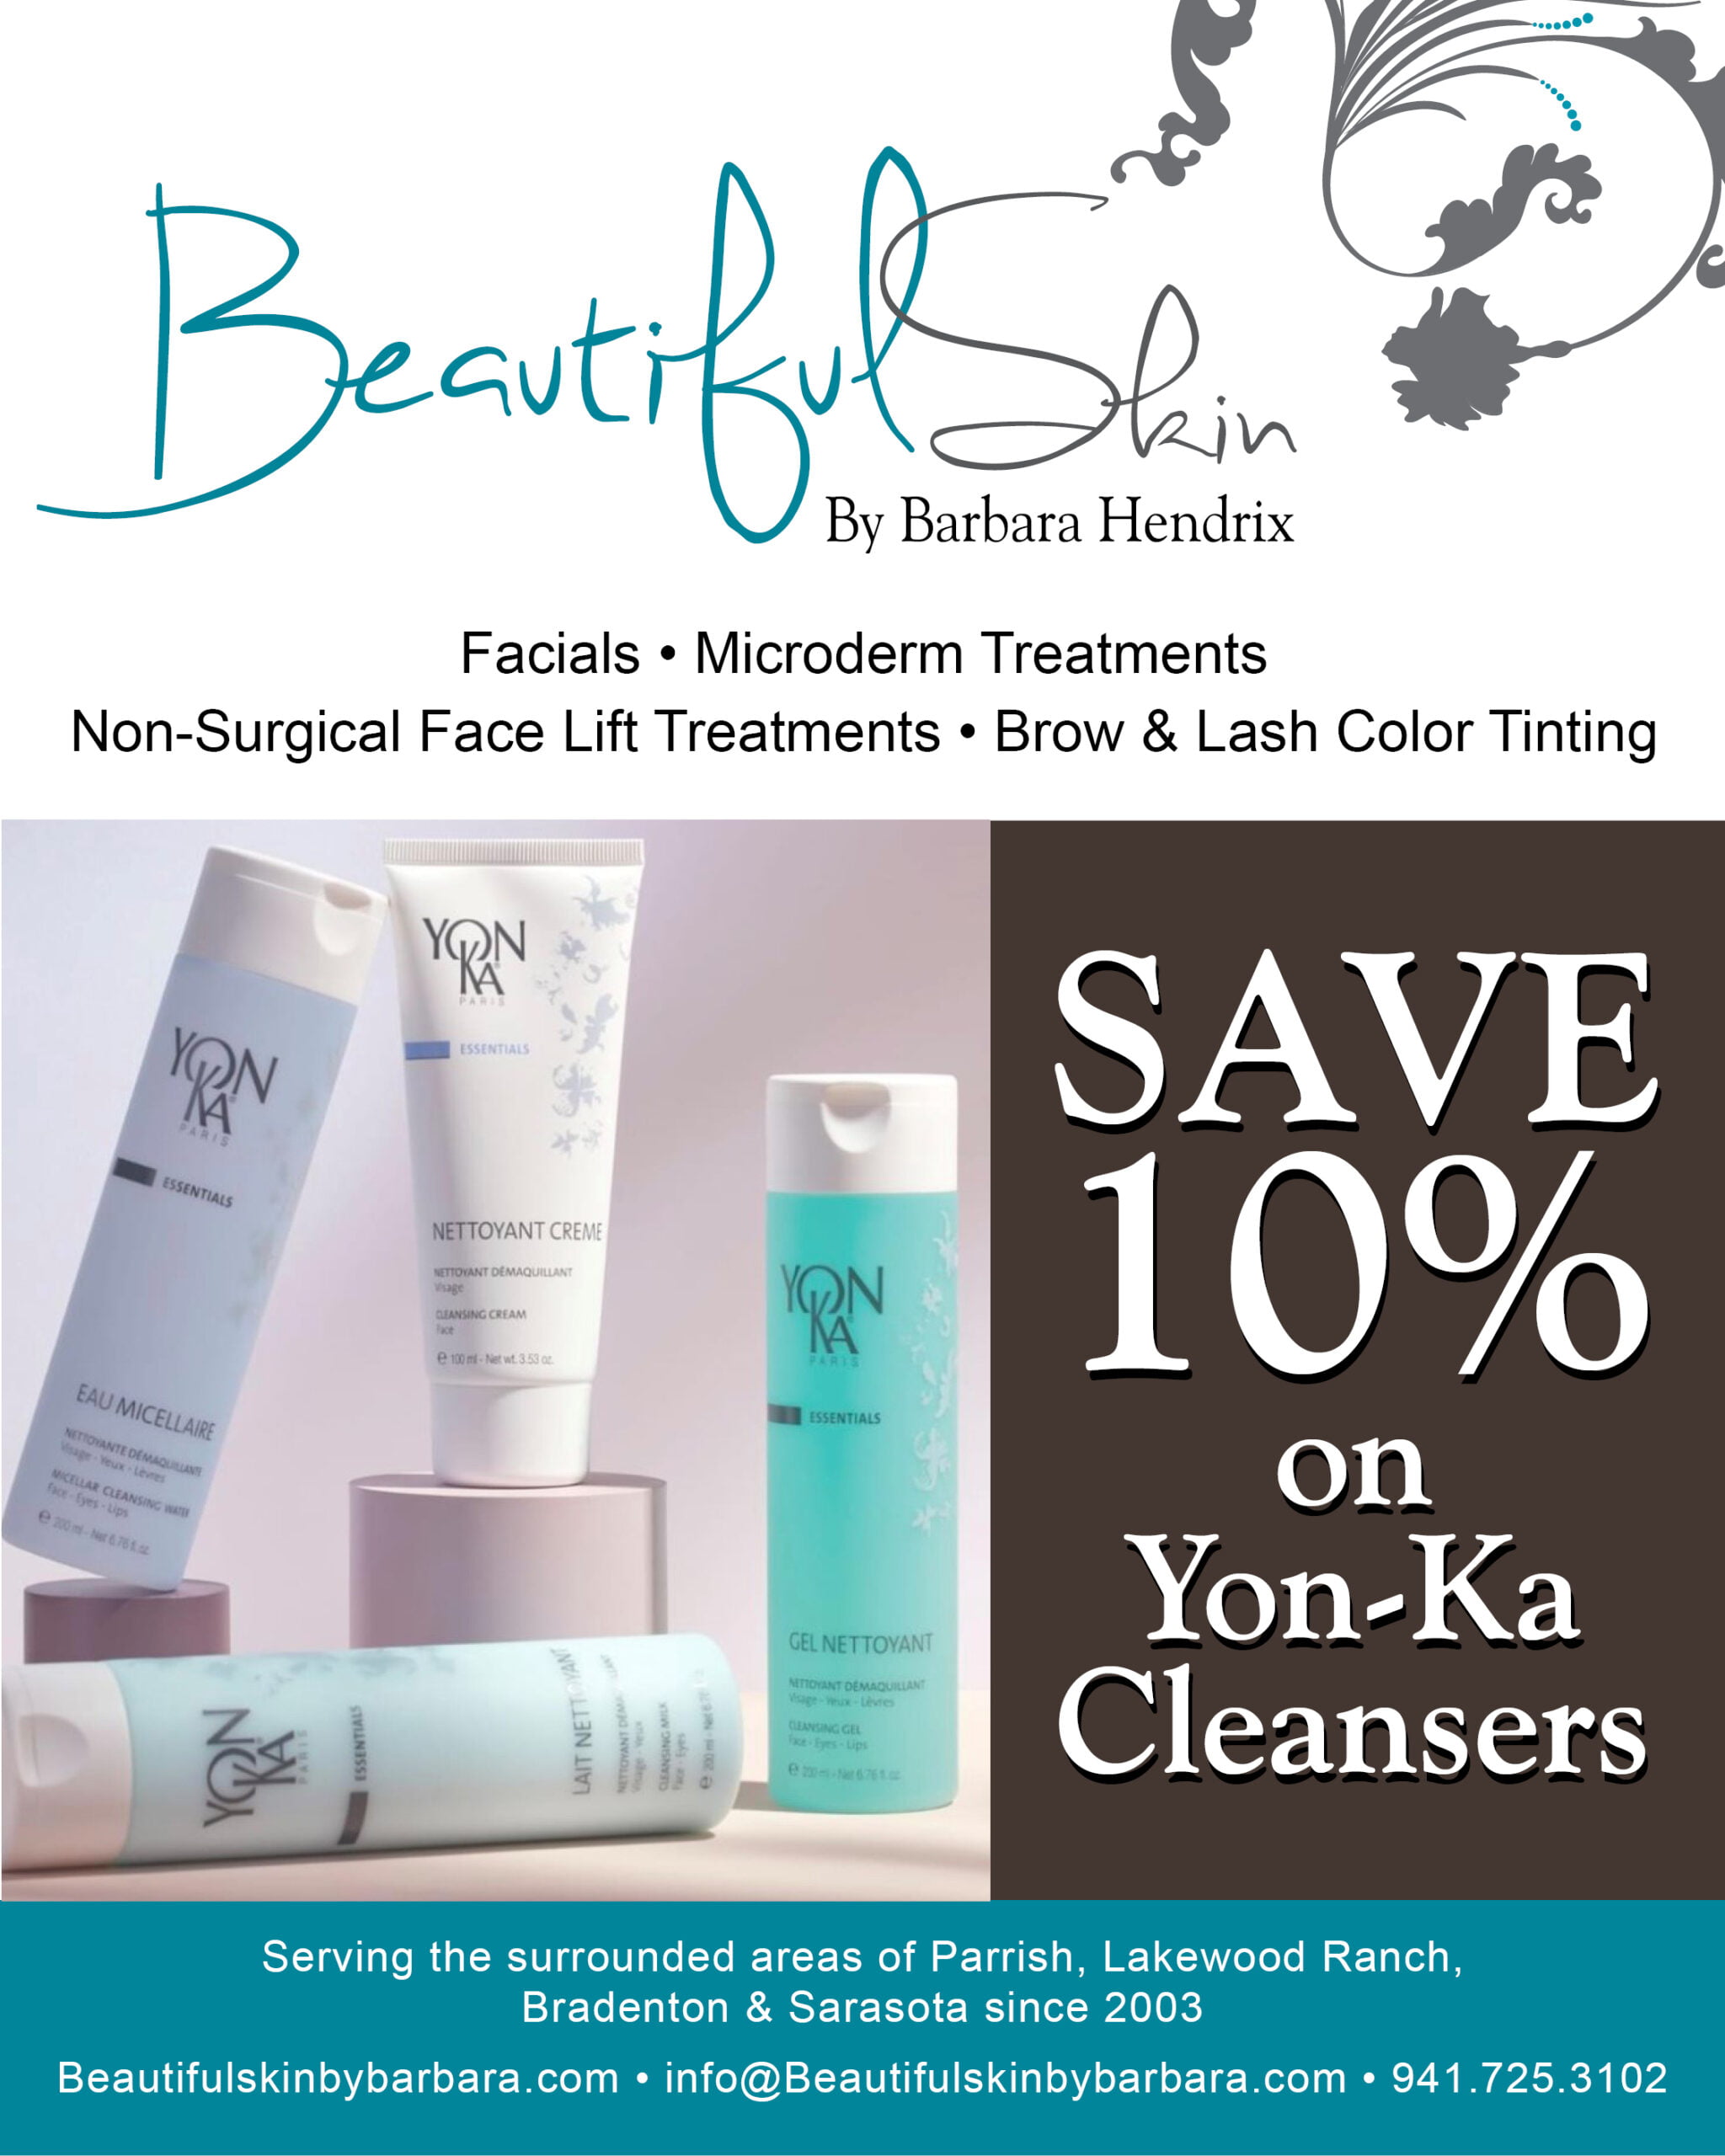 Save 10% on Yon-ka Cleansers